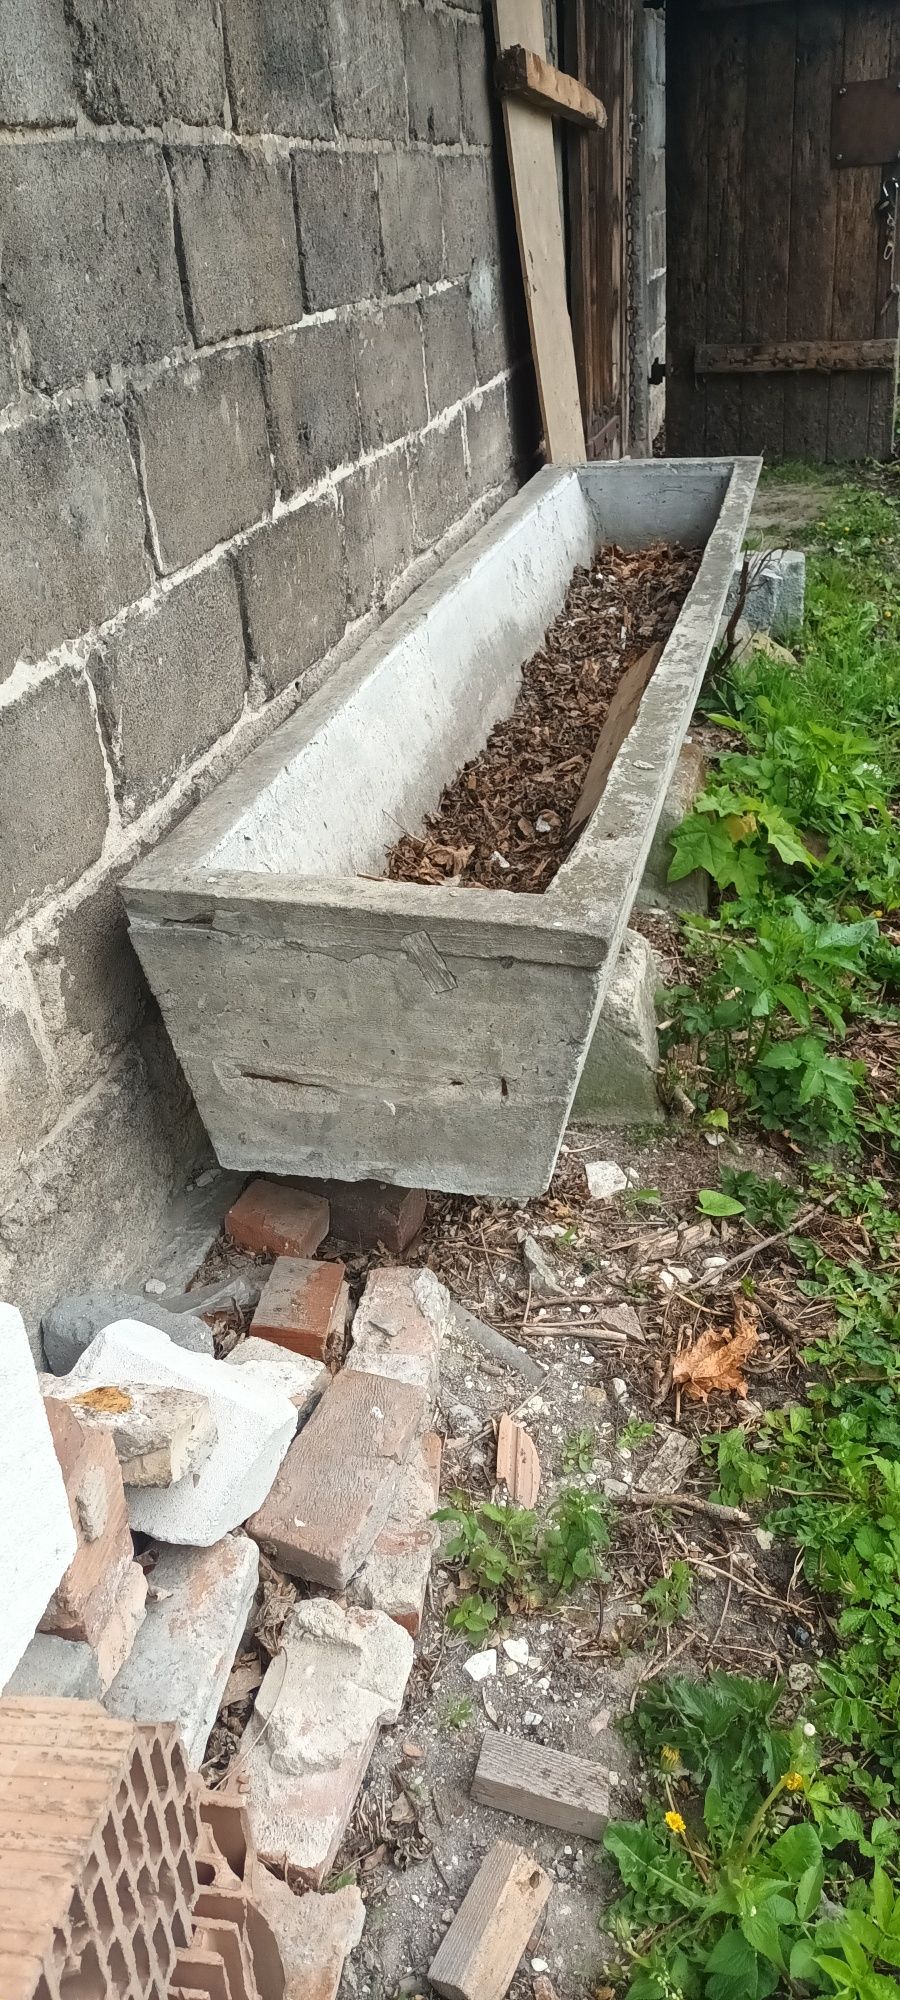 Koryto betonowe na wodę